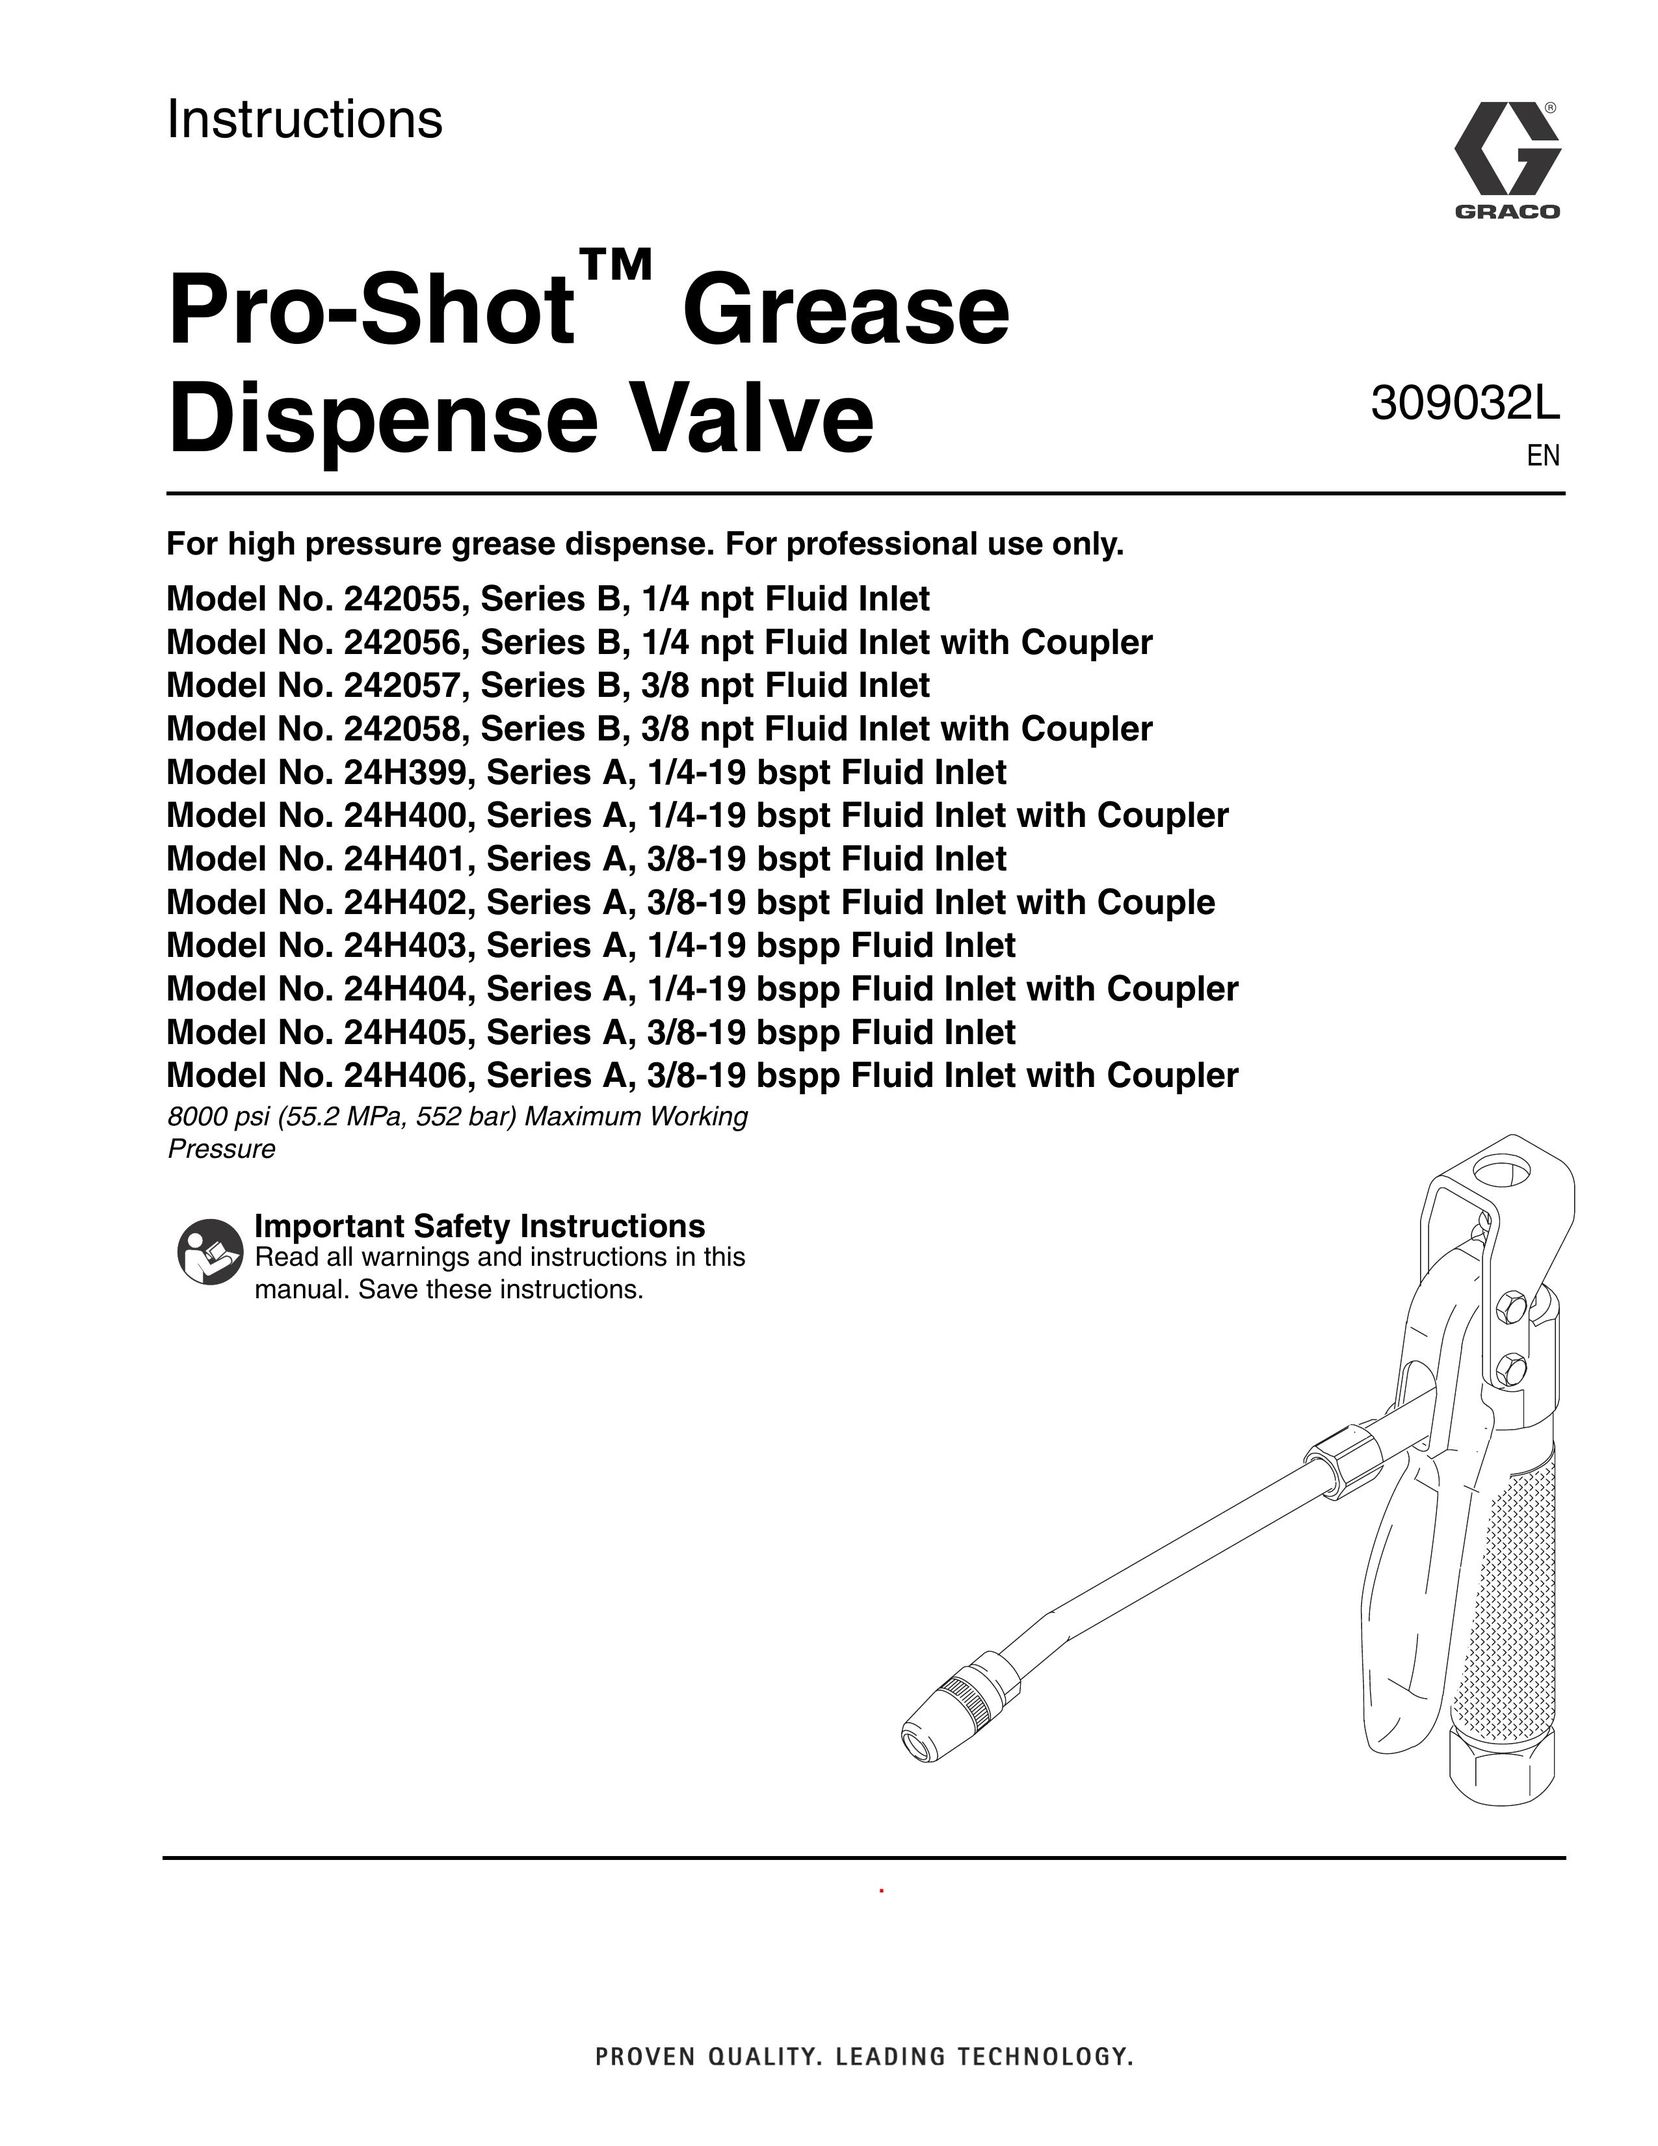 Graco 24H399 Glue Gun User Manual